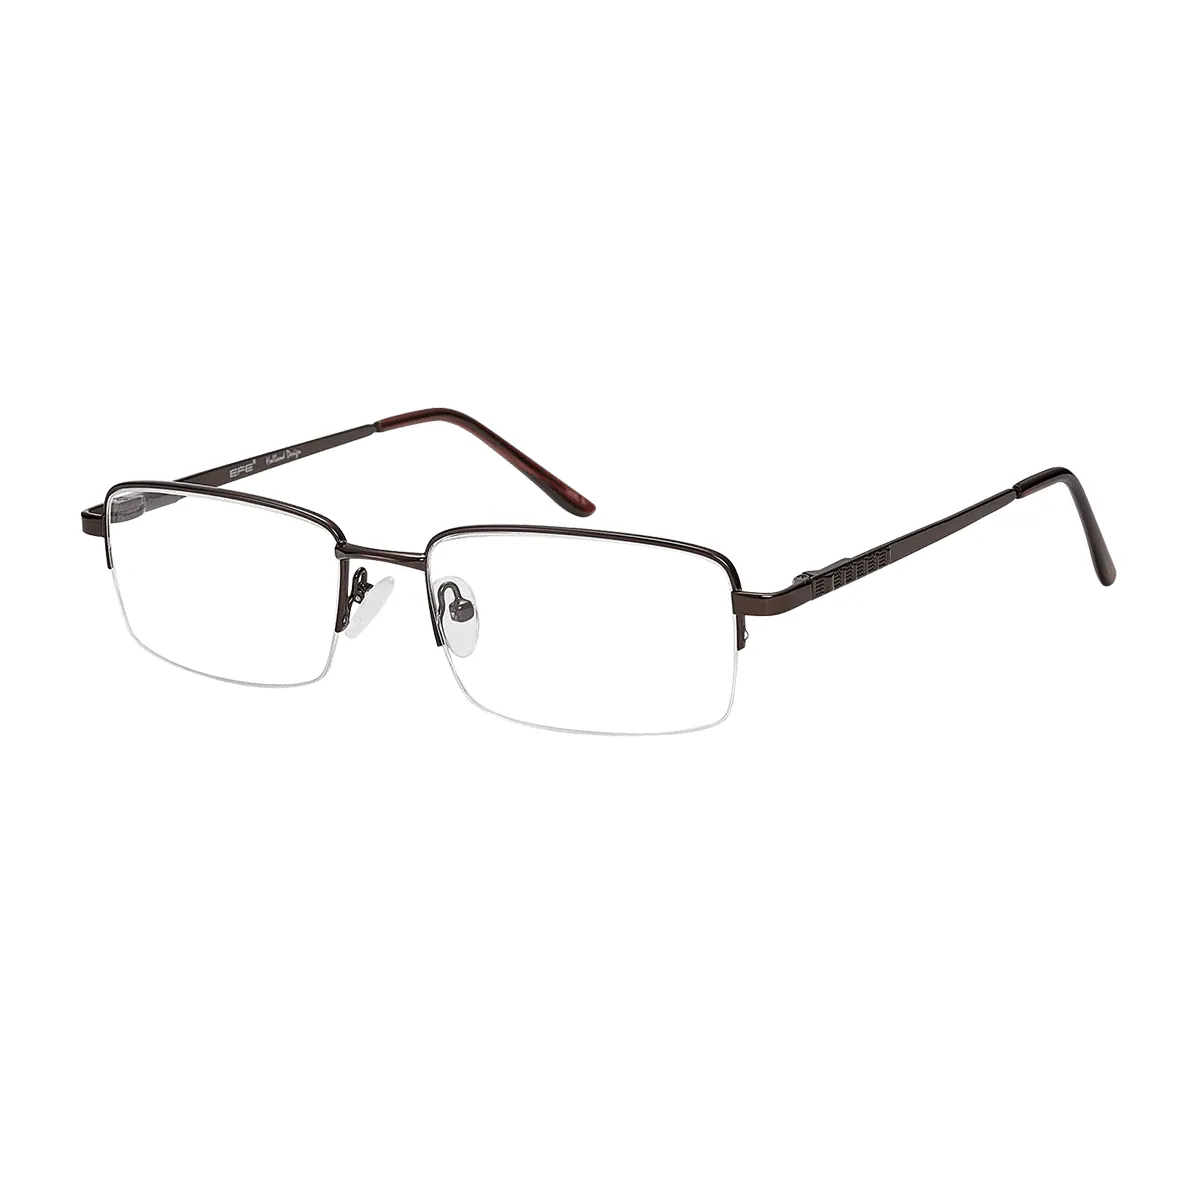 Kermit - Rectangle Brown Glasses for Men